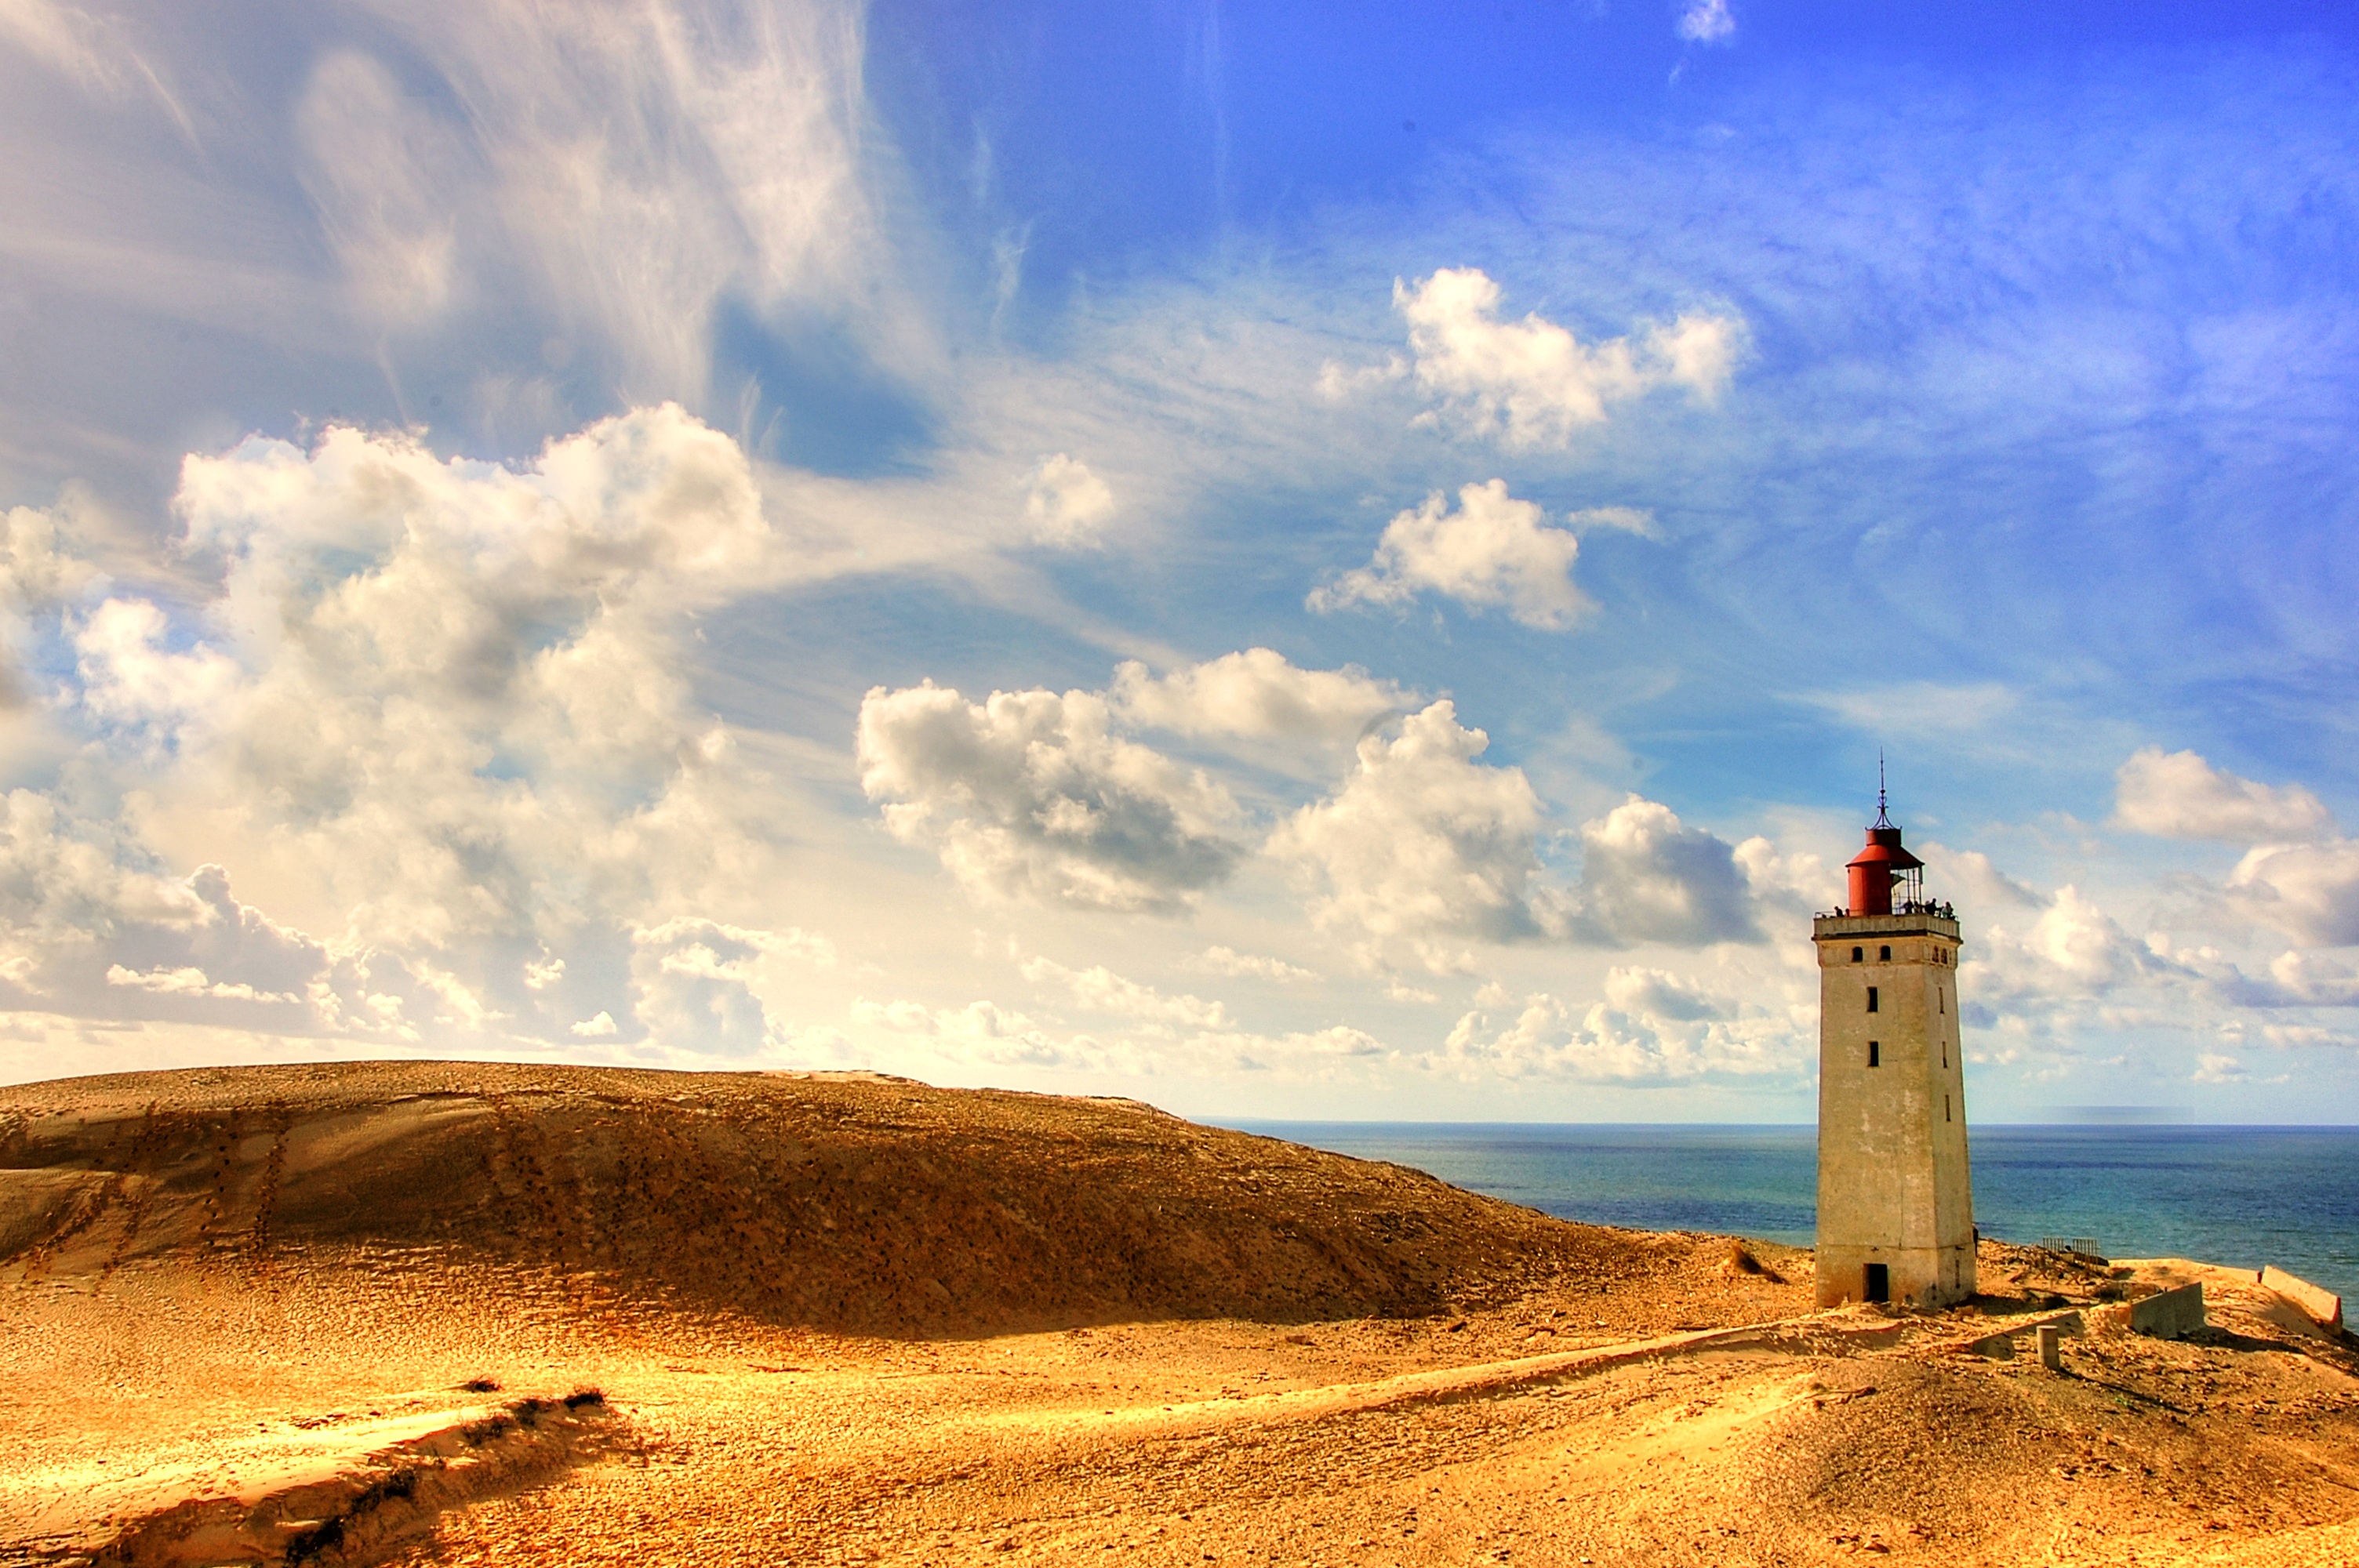 The lighthouse photo